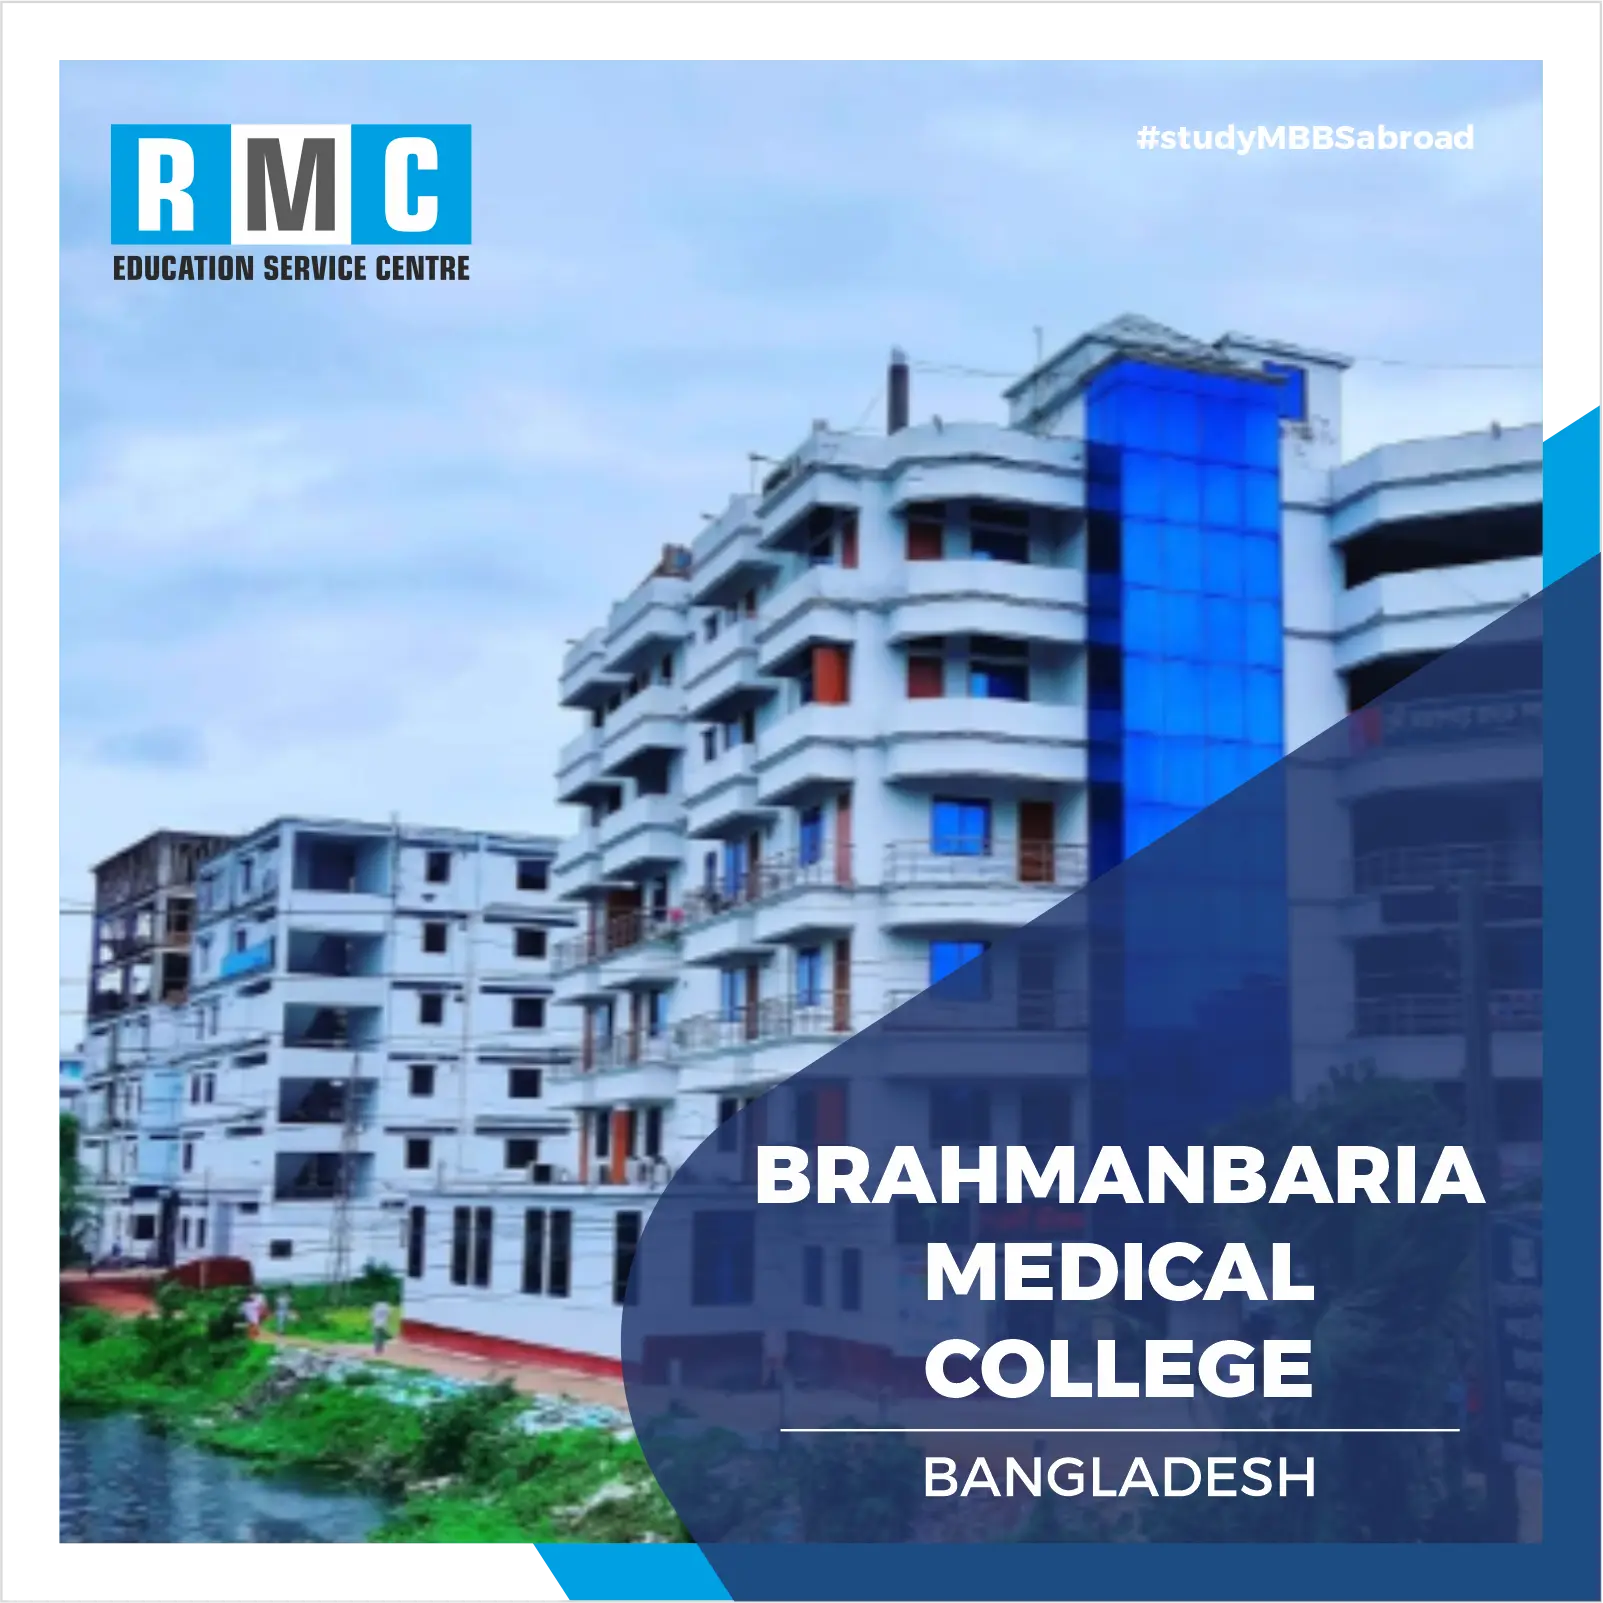 Brahmanbaria Medical College and hospital